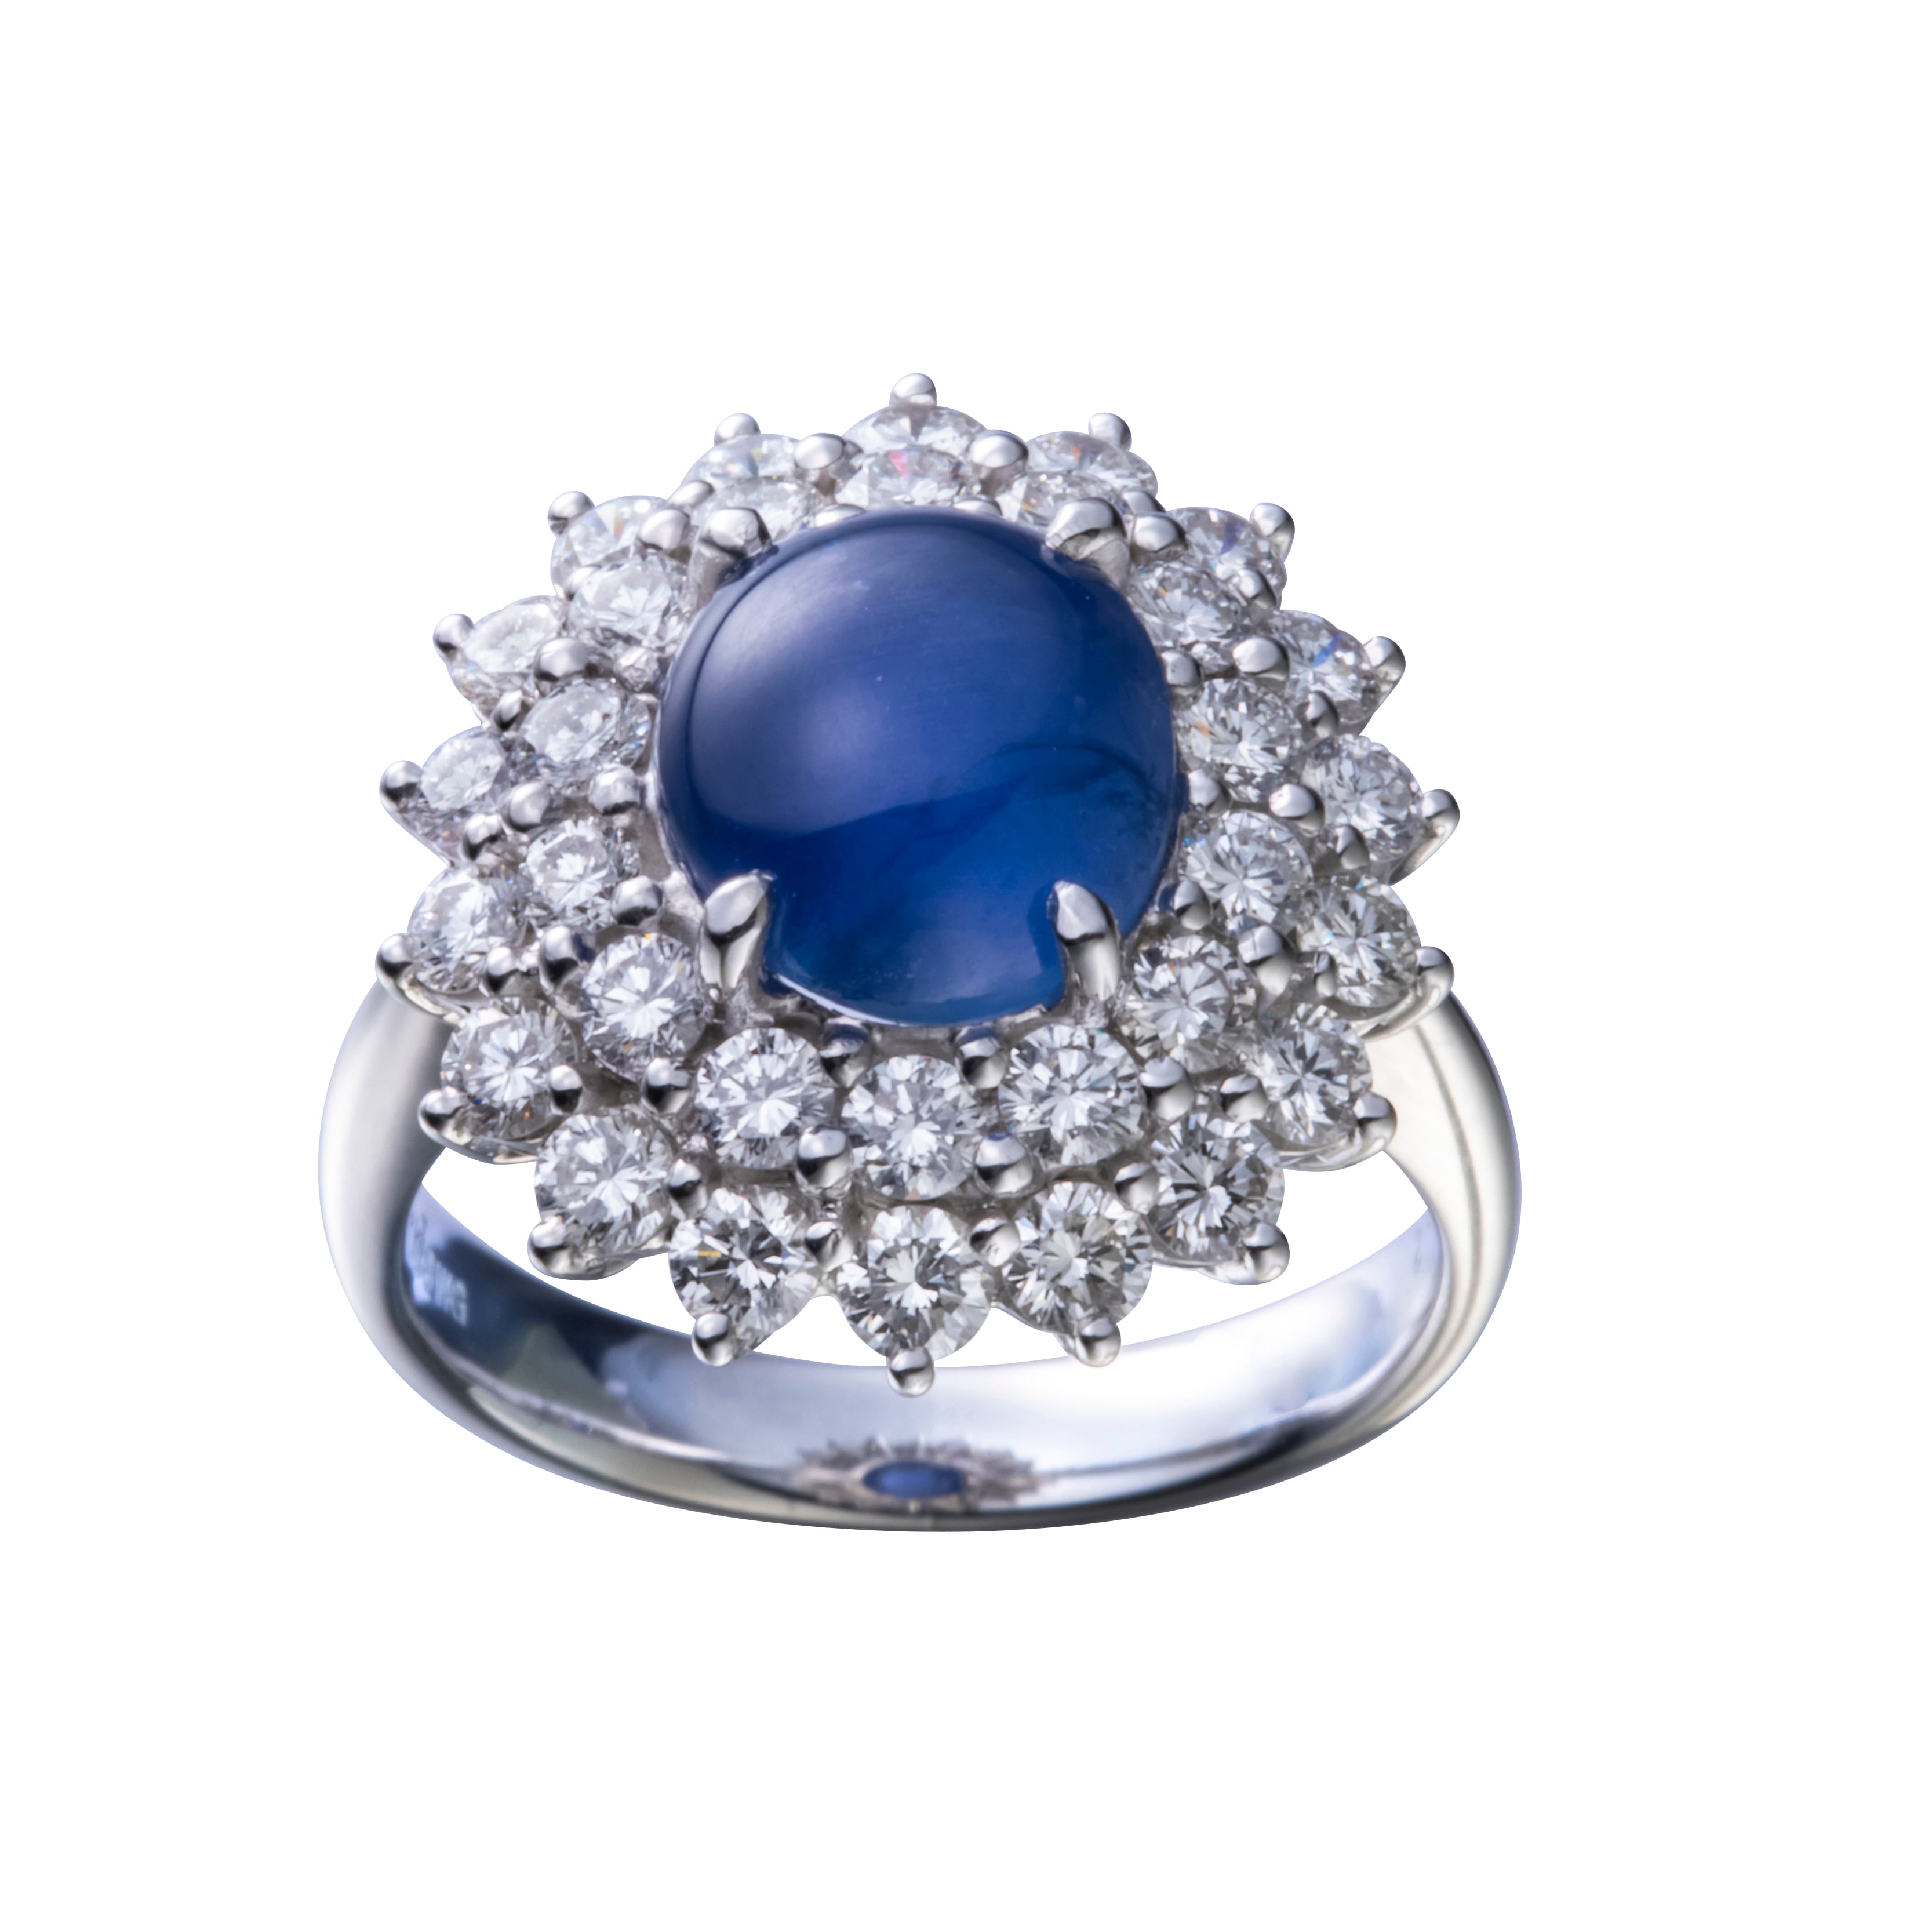 K18WGスターサファイアダイヤモンド jewelry shop oroshiba | jewelry